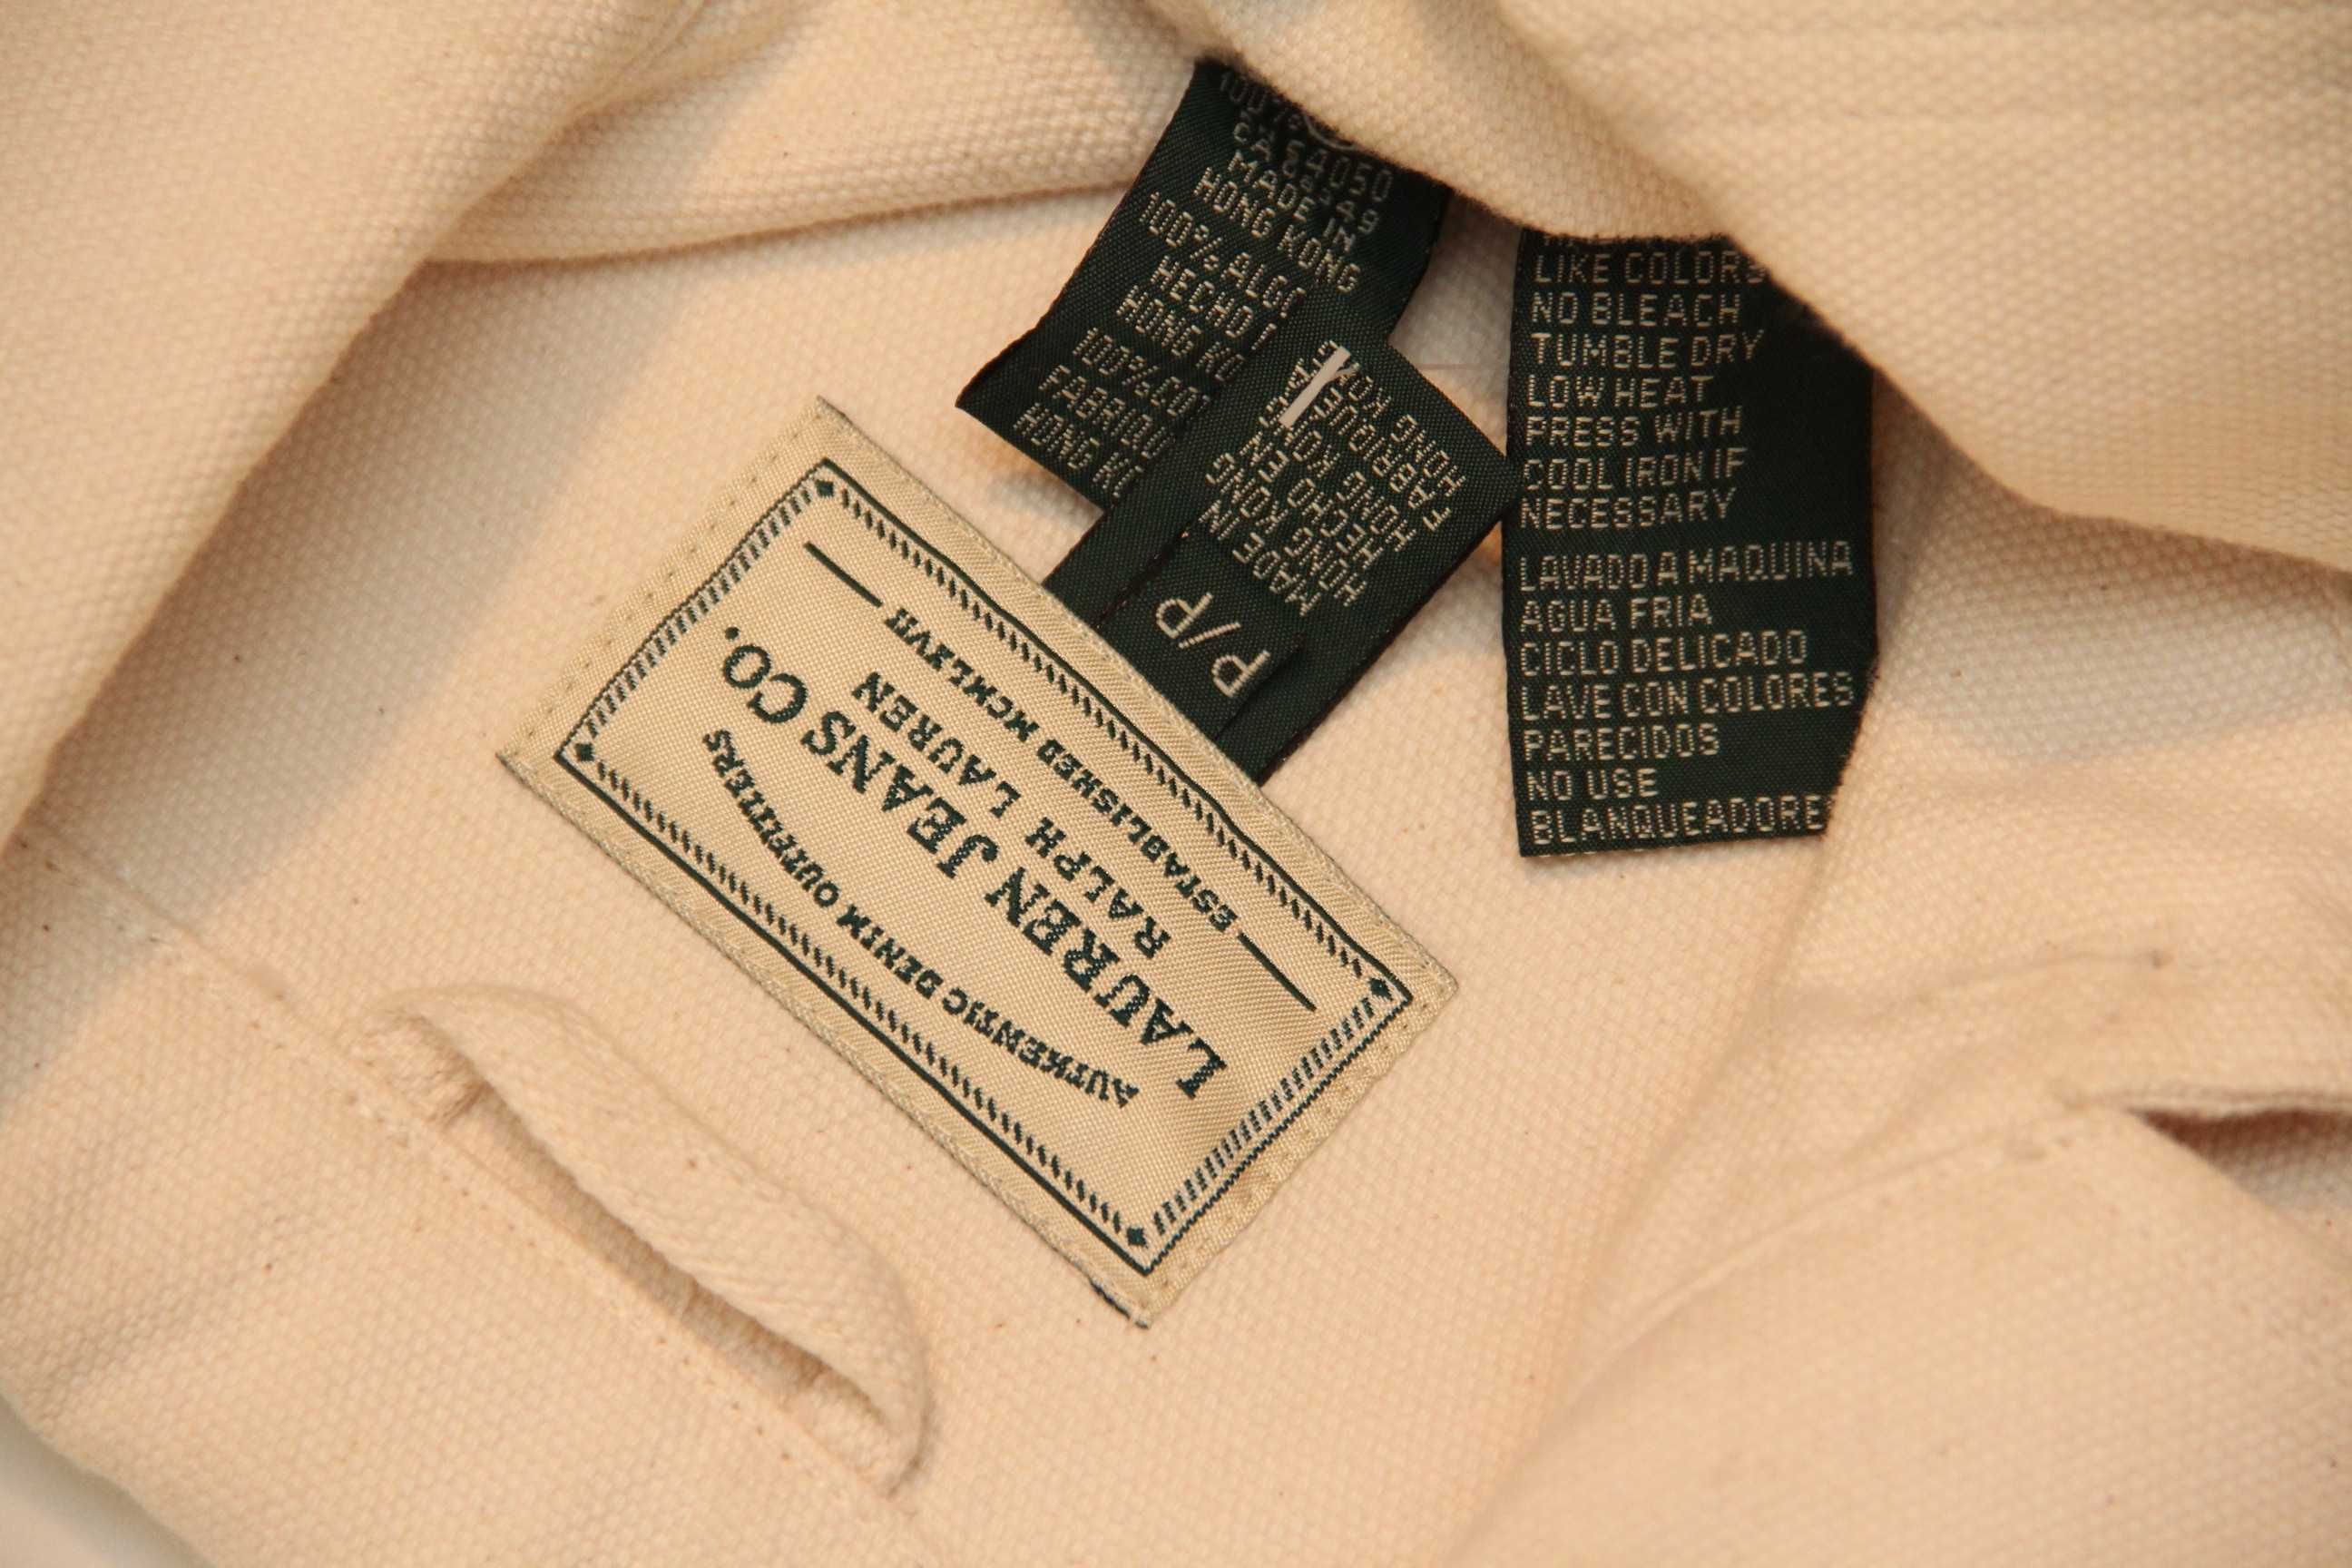 Polo Ralph Lauren рр  S куртка из плотного хлопка на манер Workwear